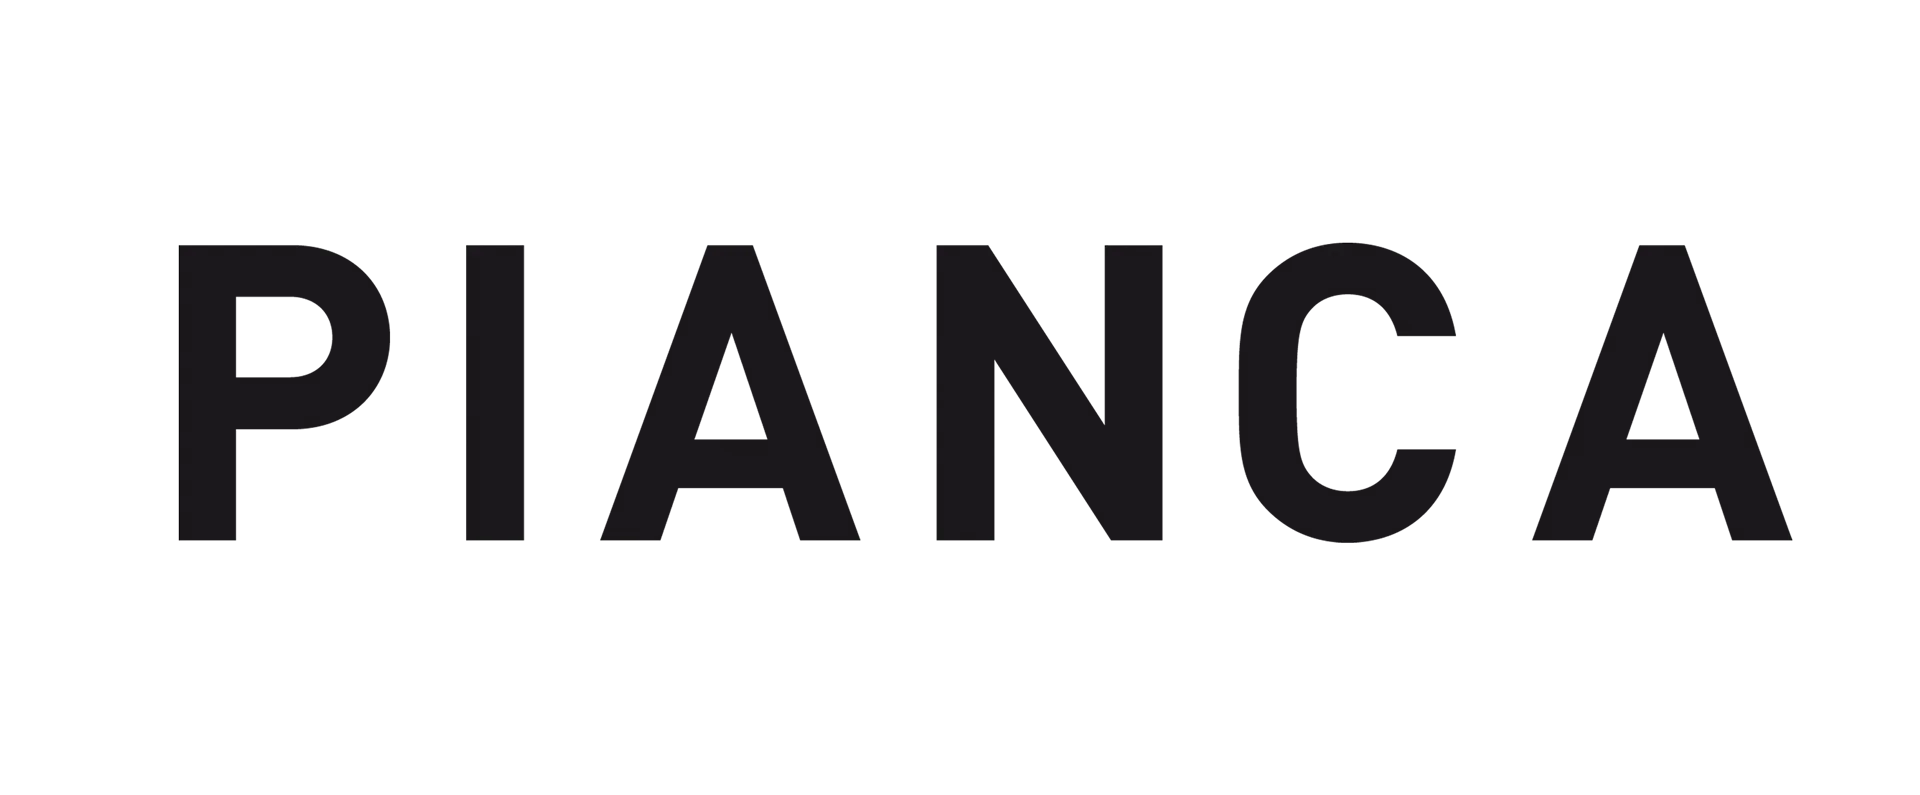 Pianca Logo